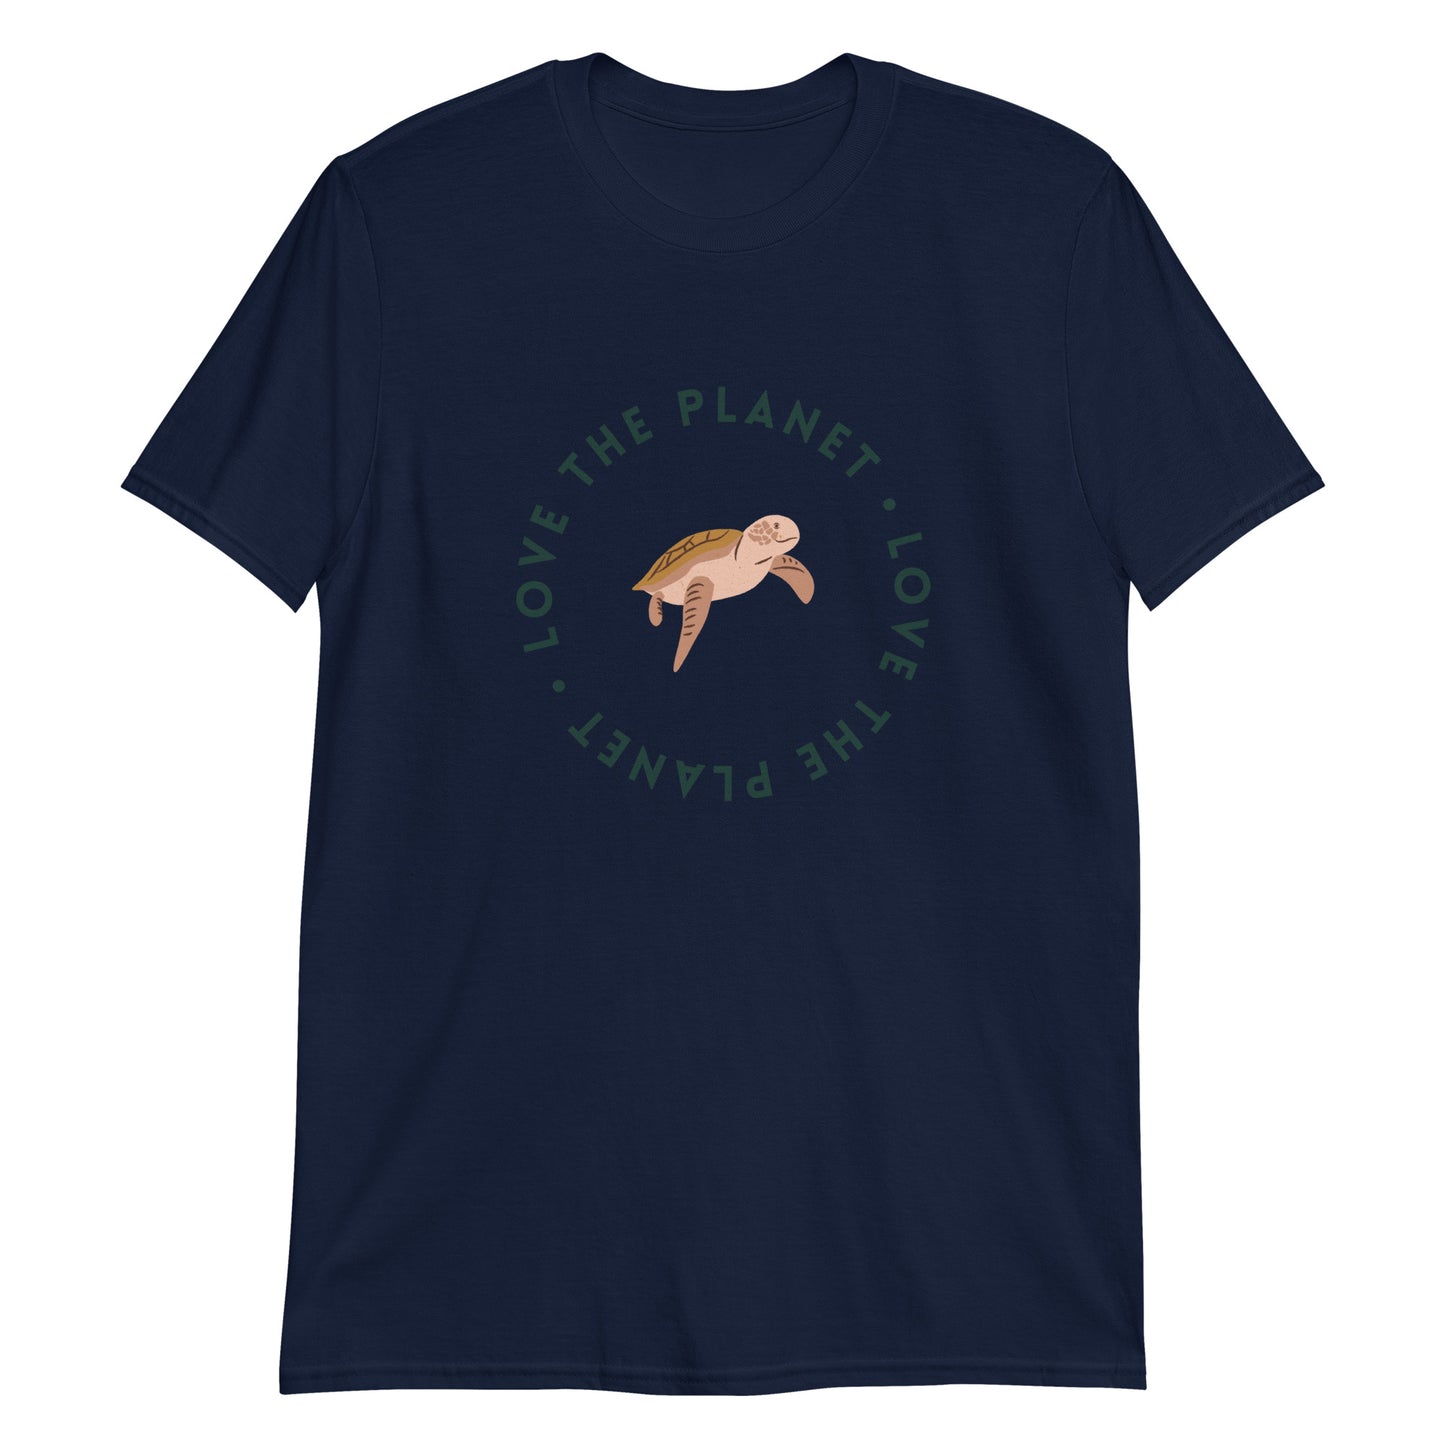 Love The Planet - Short-Sleeve Unisex T-Shirt Navy Unisex T-shirt Animal